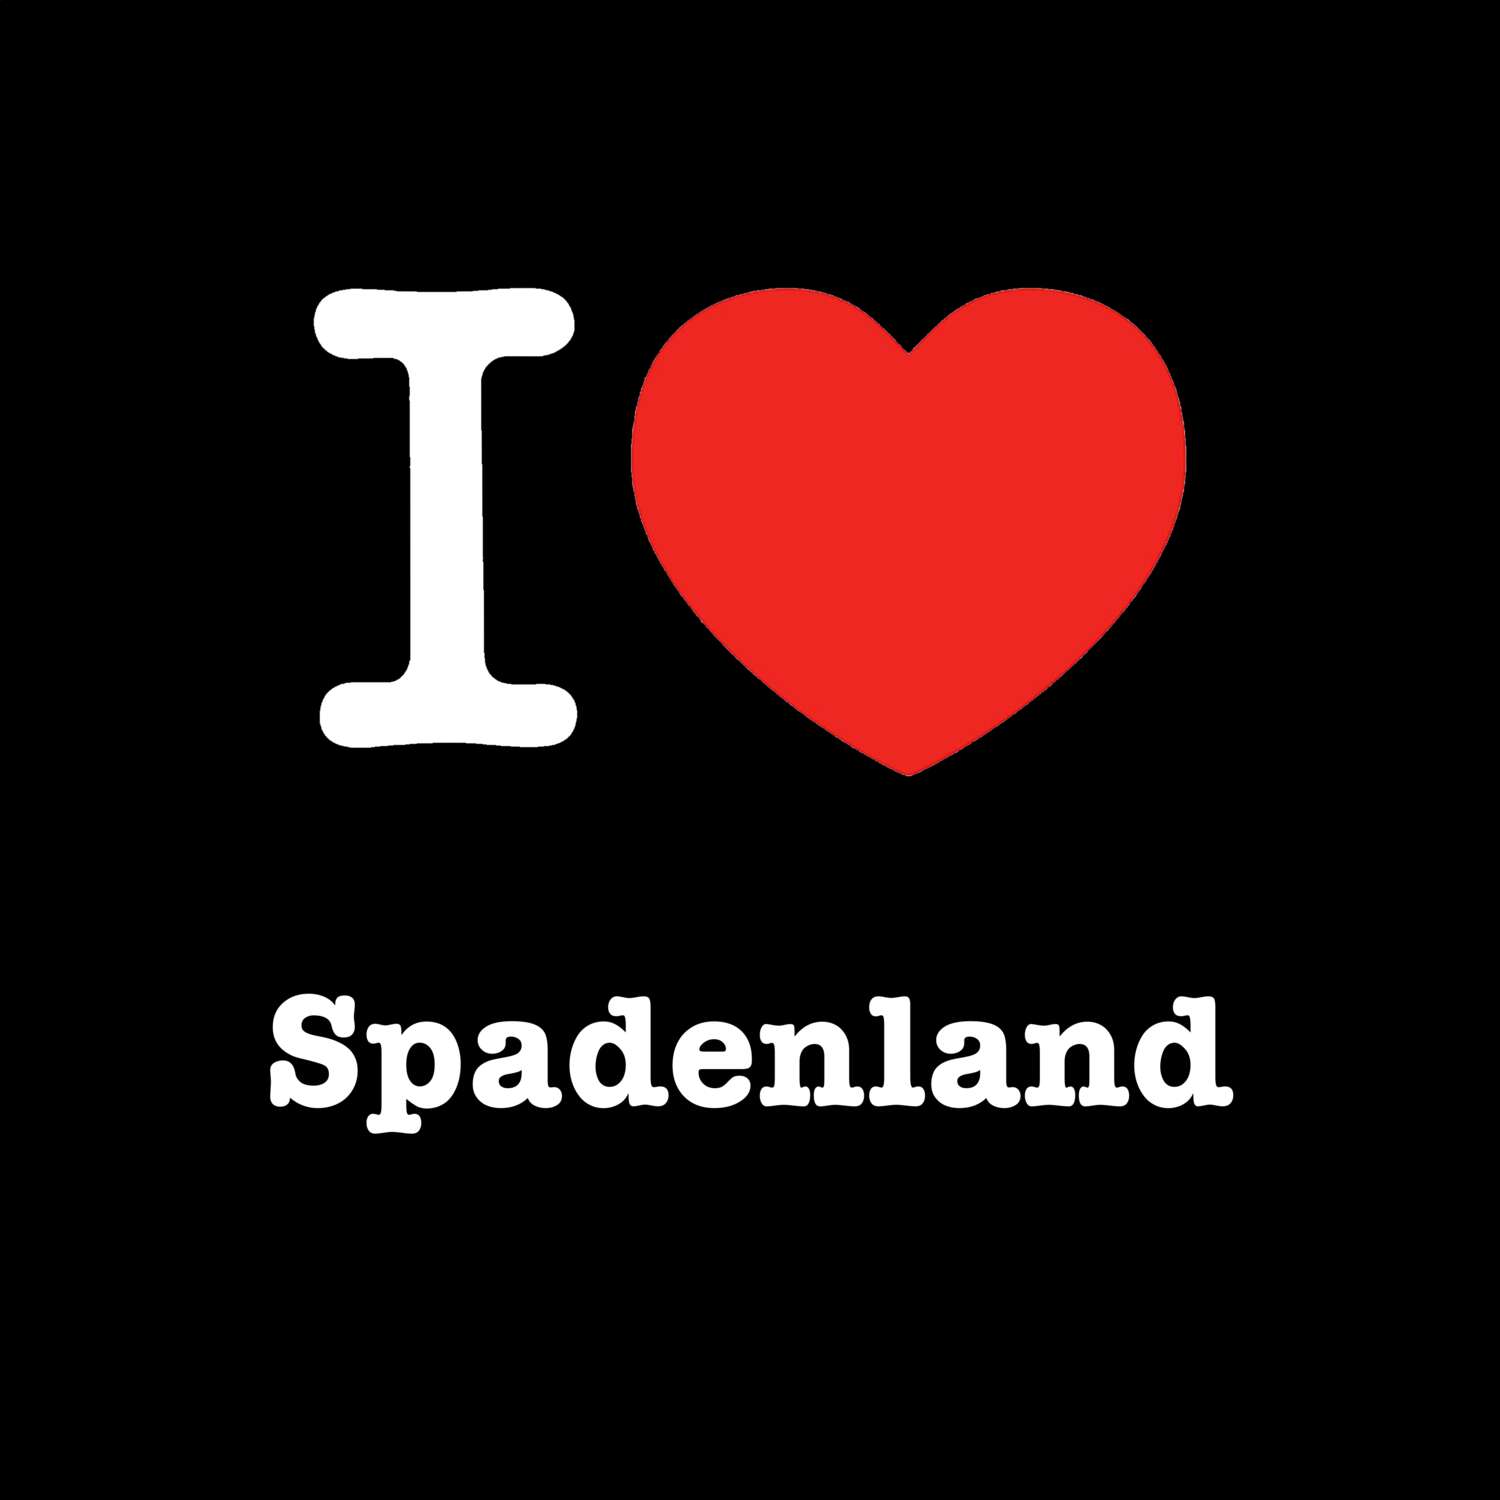 Spadenland T-Shirt »I love«